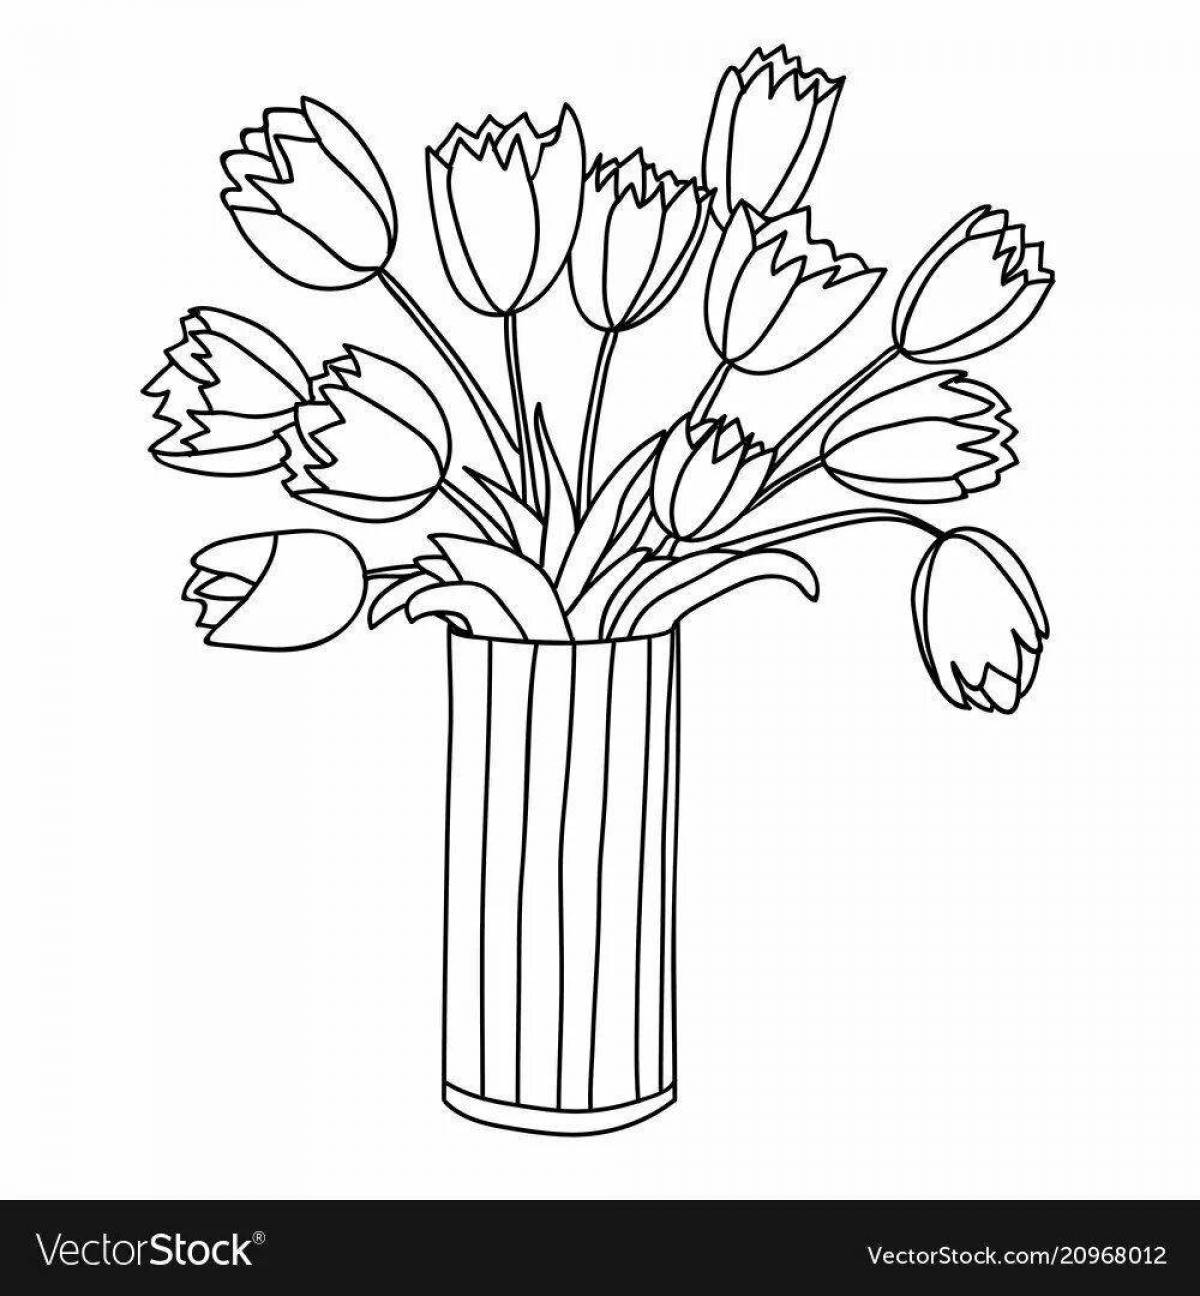 Тюльпаны в вазе для раскрашивания